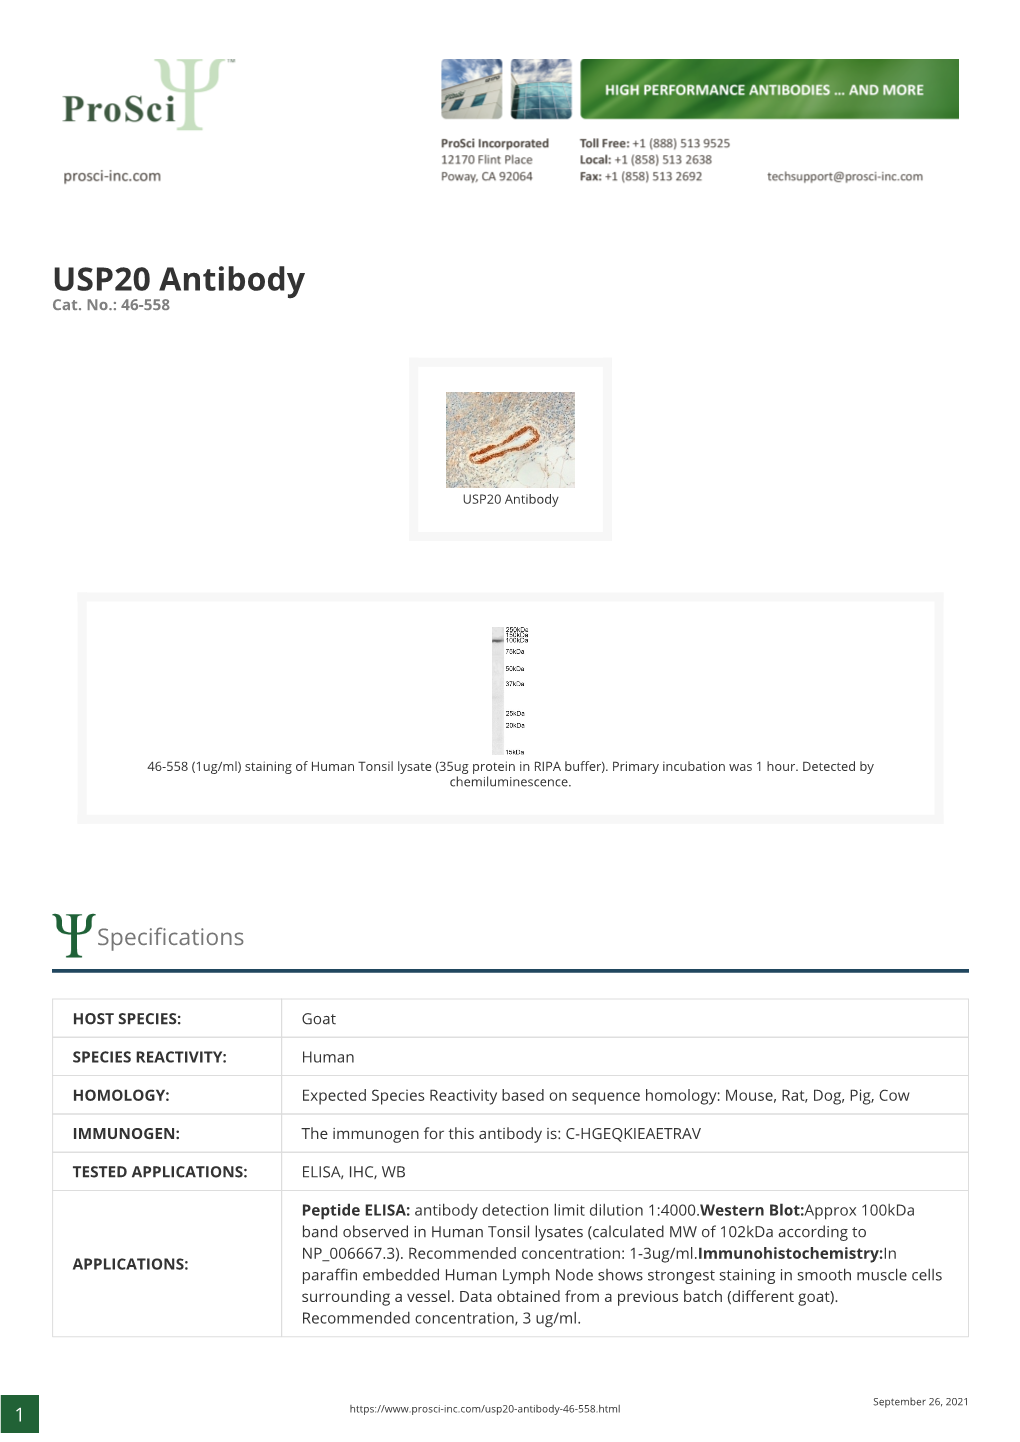 USP20 Antibody Cat